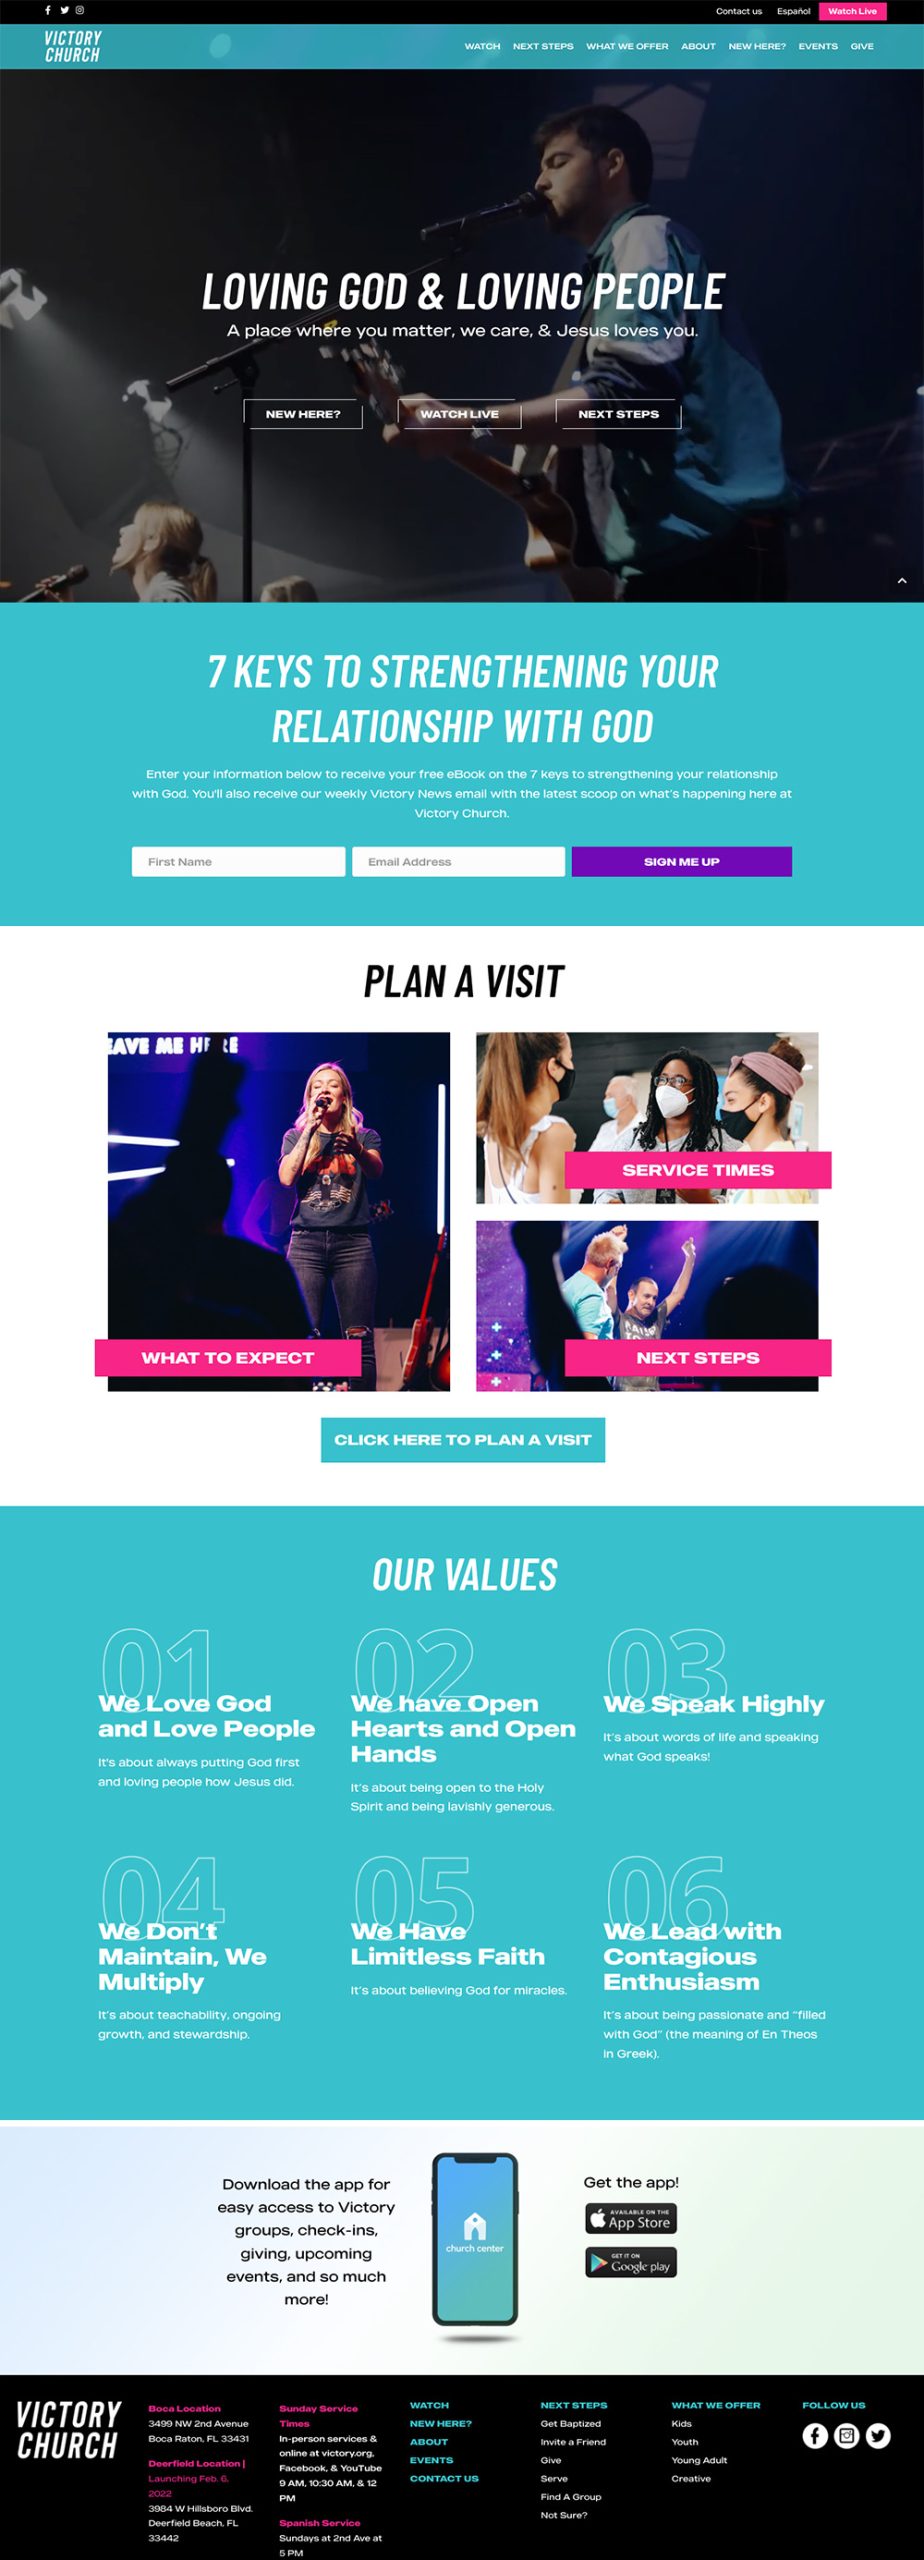 Victory Church Website Design By Red Van Creative